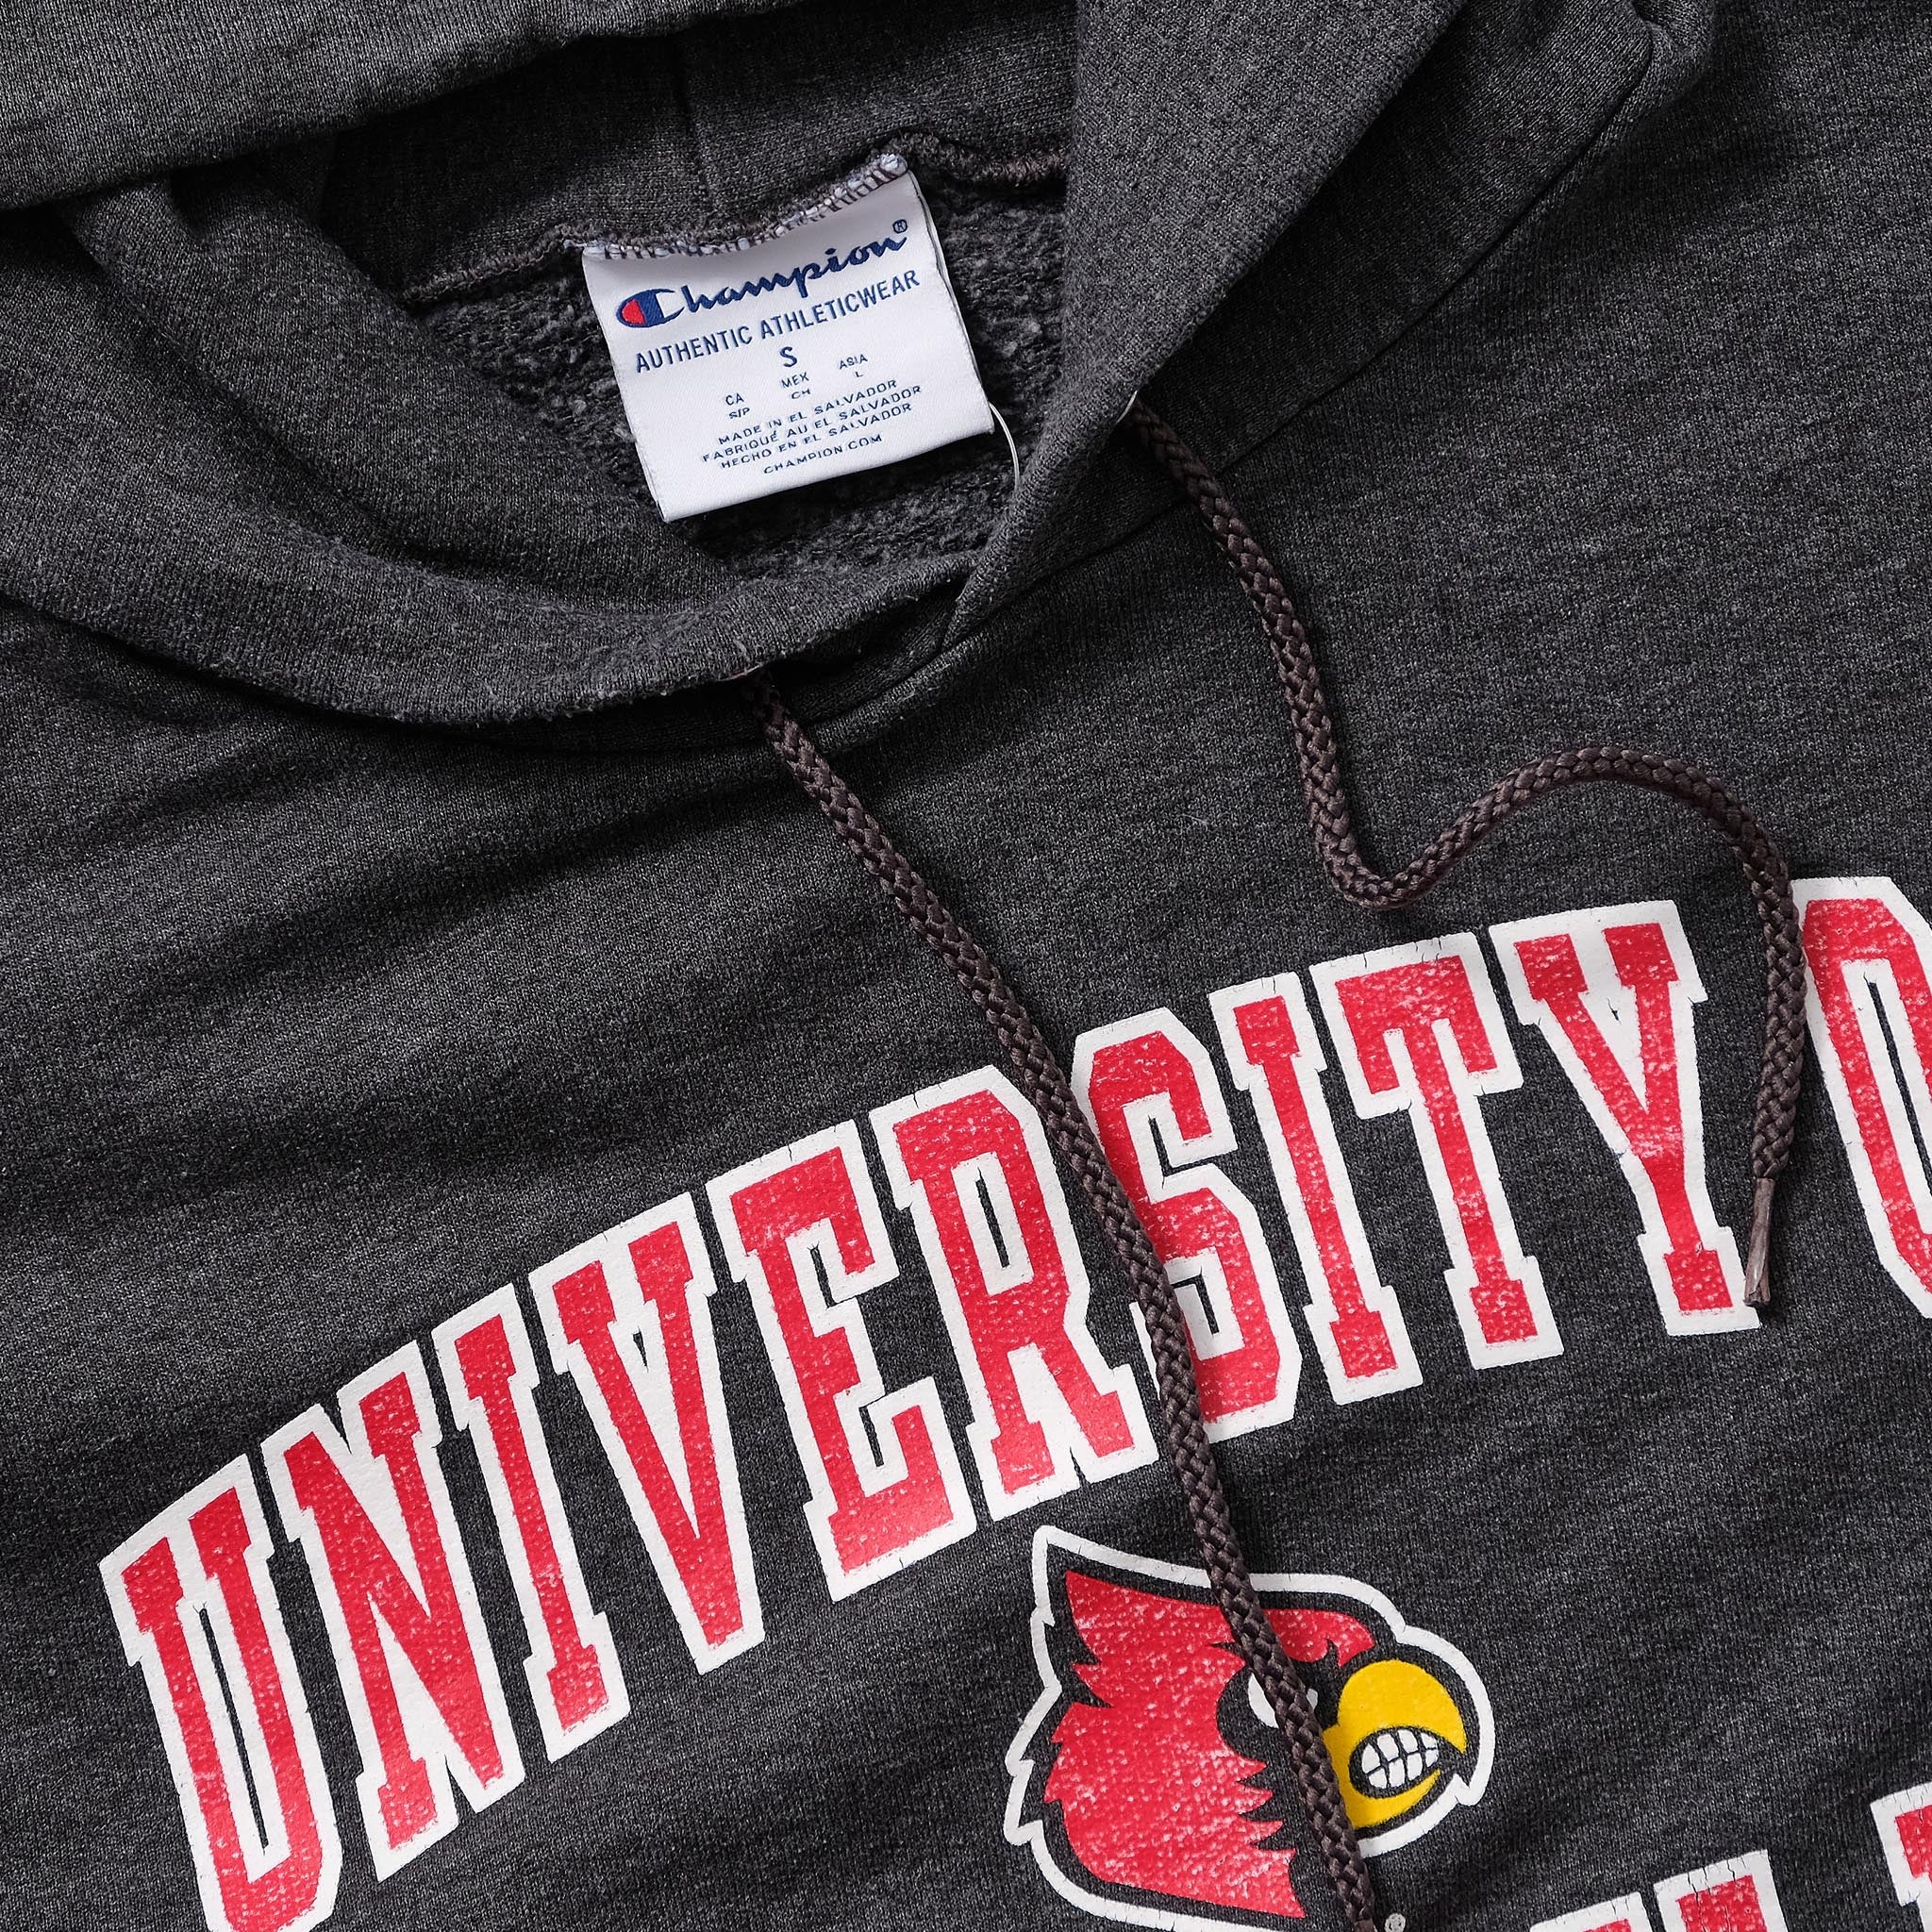 Champion Products University of Louisville Cardinals Hooded Sweatshirt